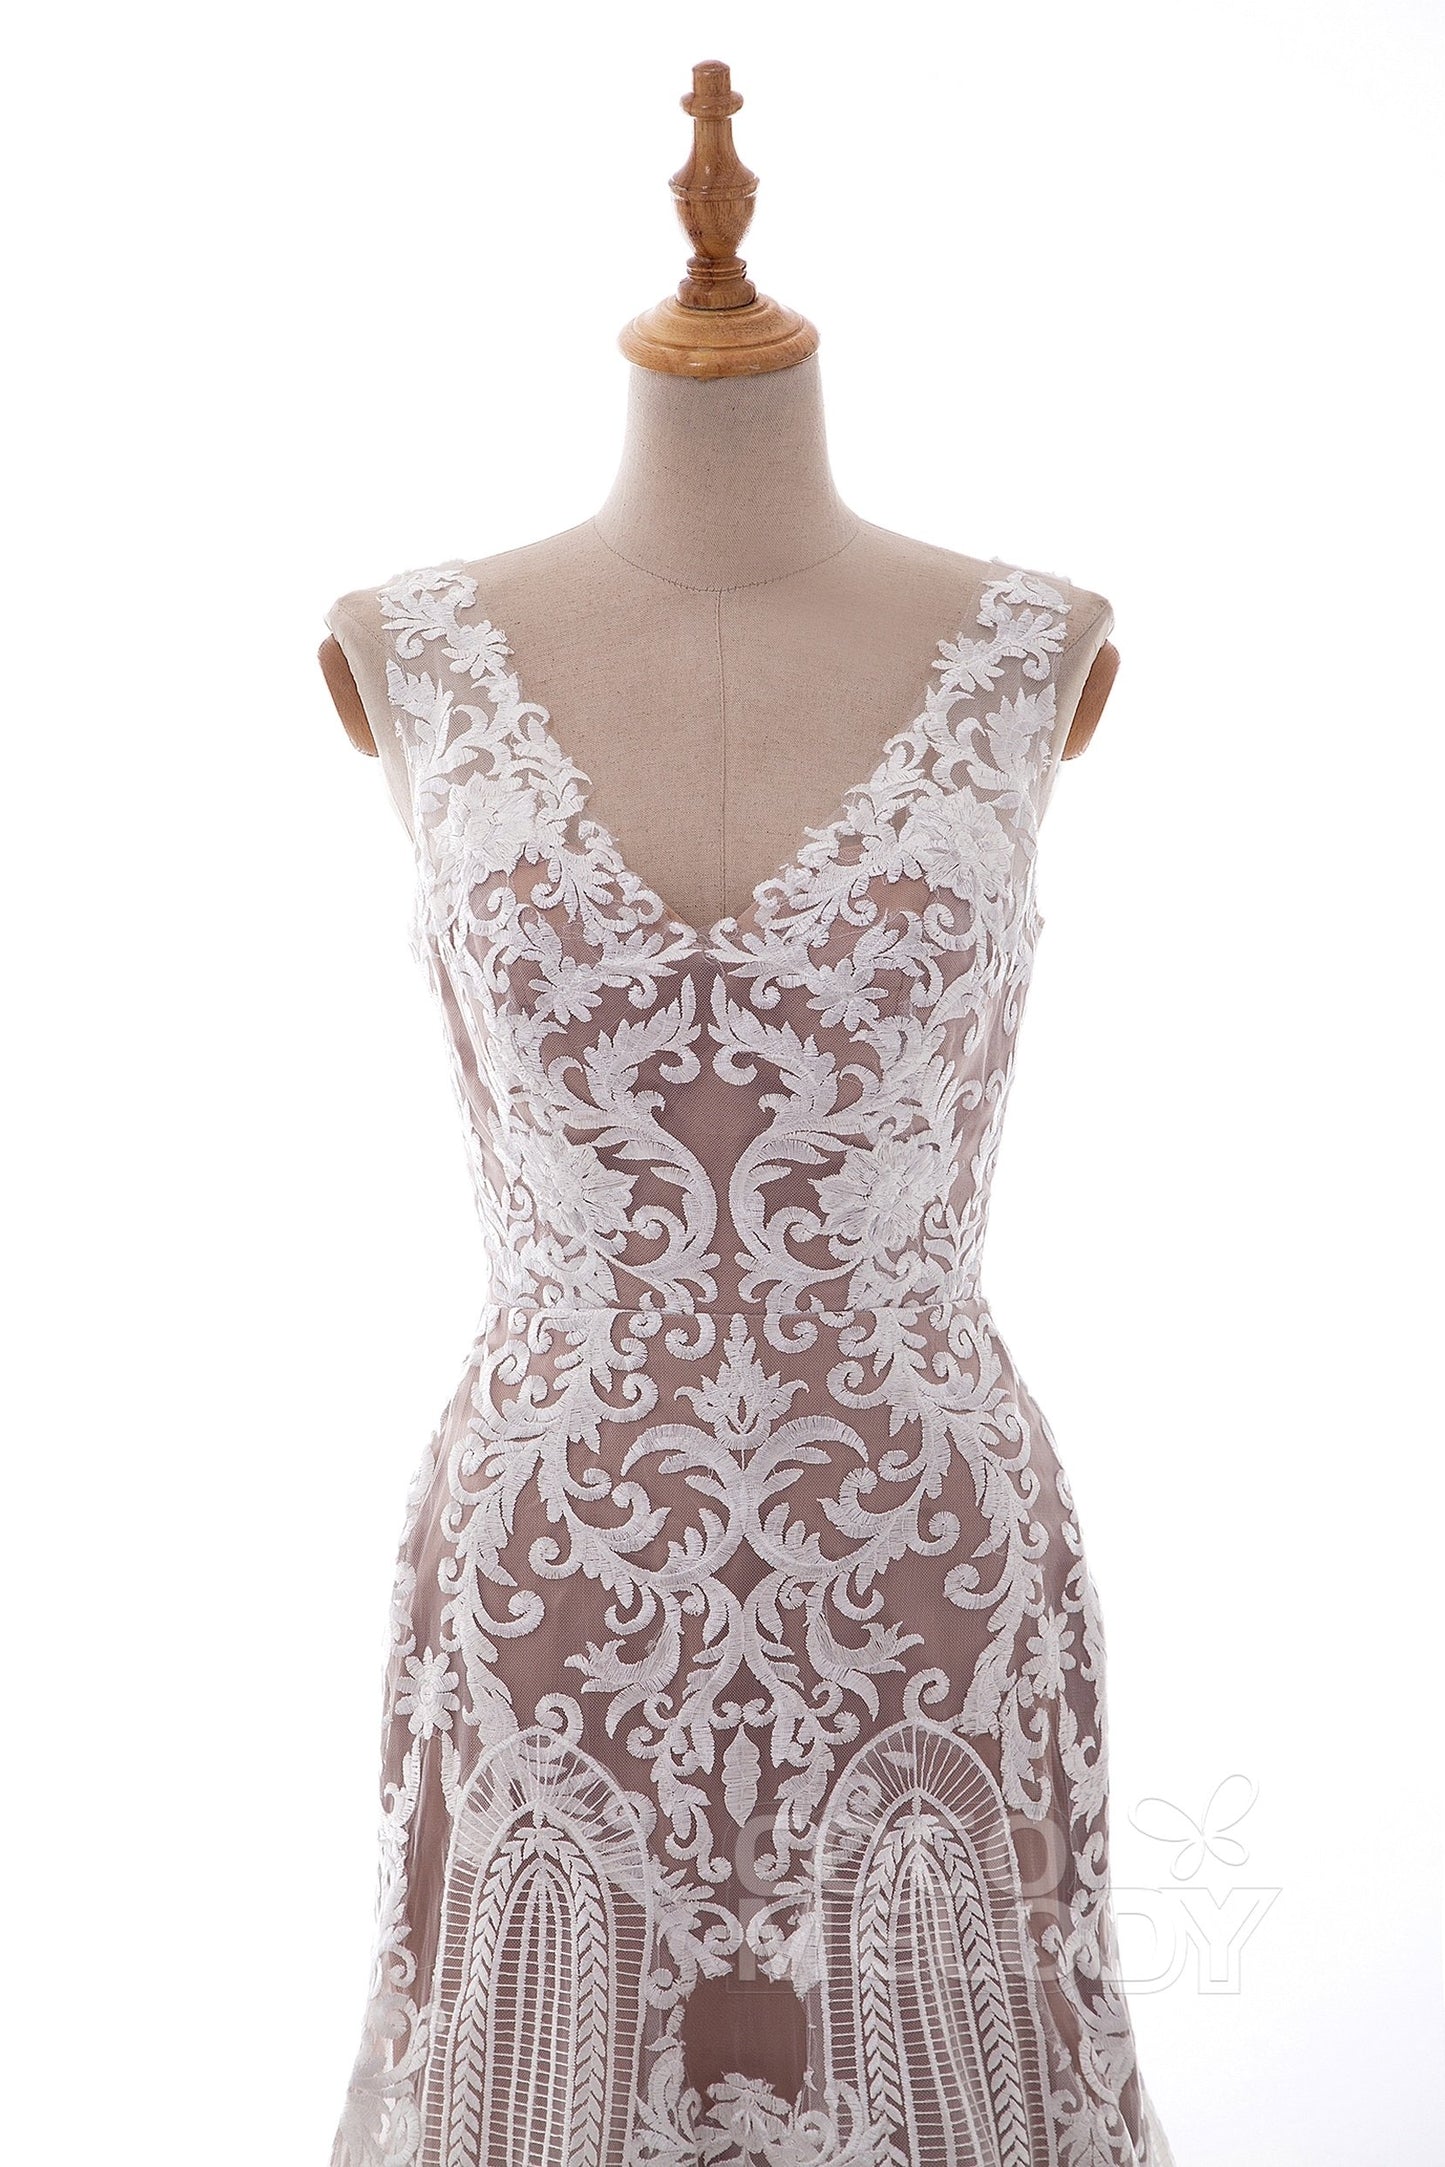 Sheath-Column Court Train Tulle Lace Wedding Dress LD4722